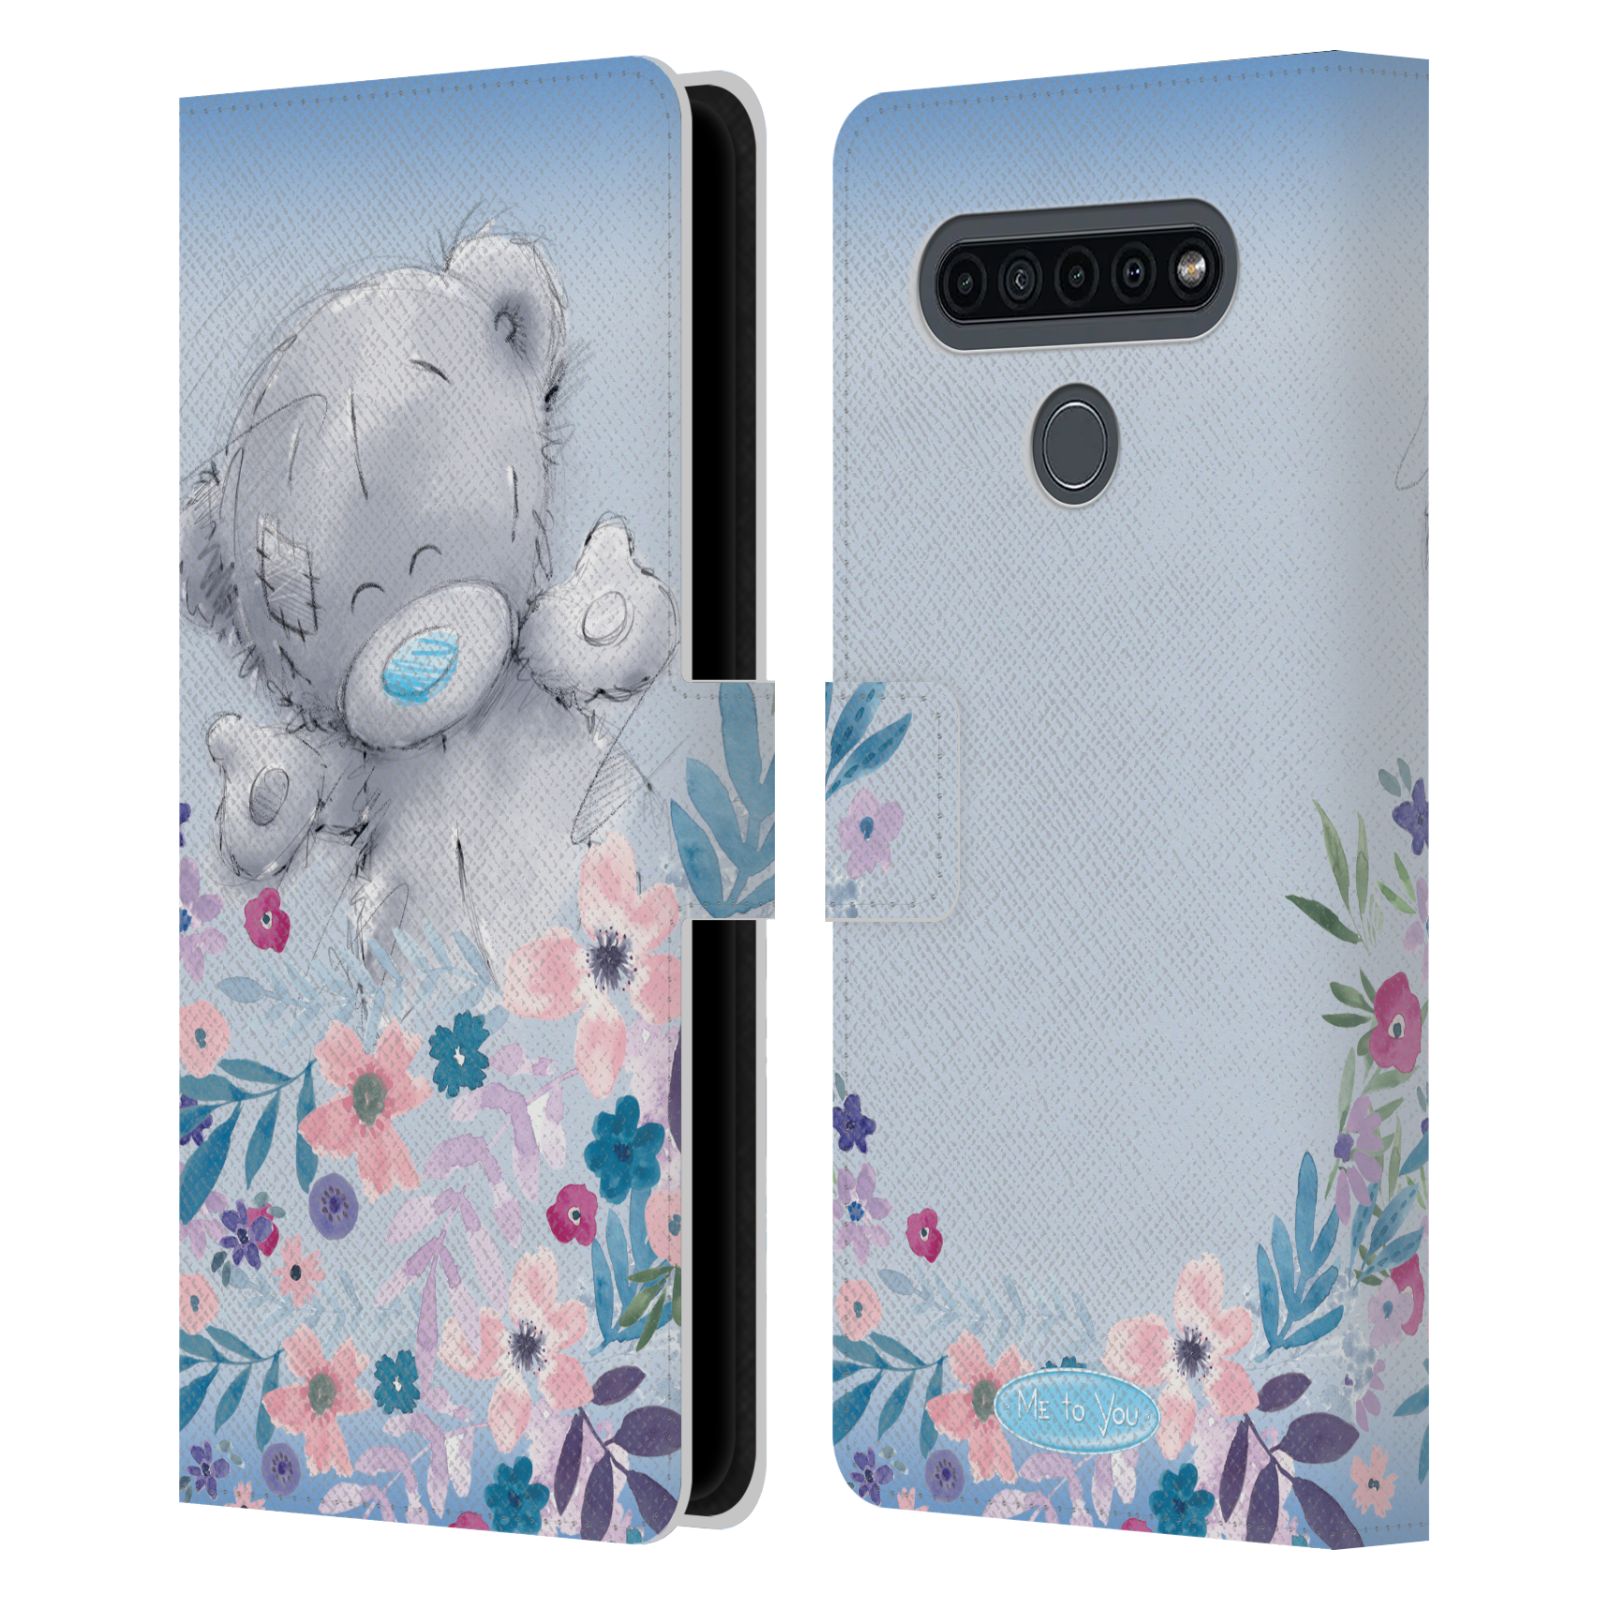 Pouzdro na mobil LG K41s  - HEAD CASE - Me To You - Medvídek mezi květinami